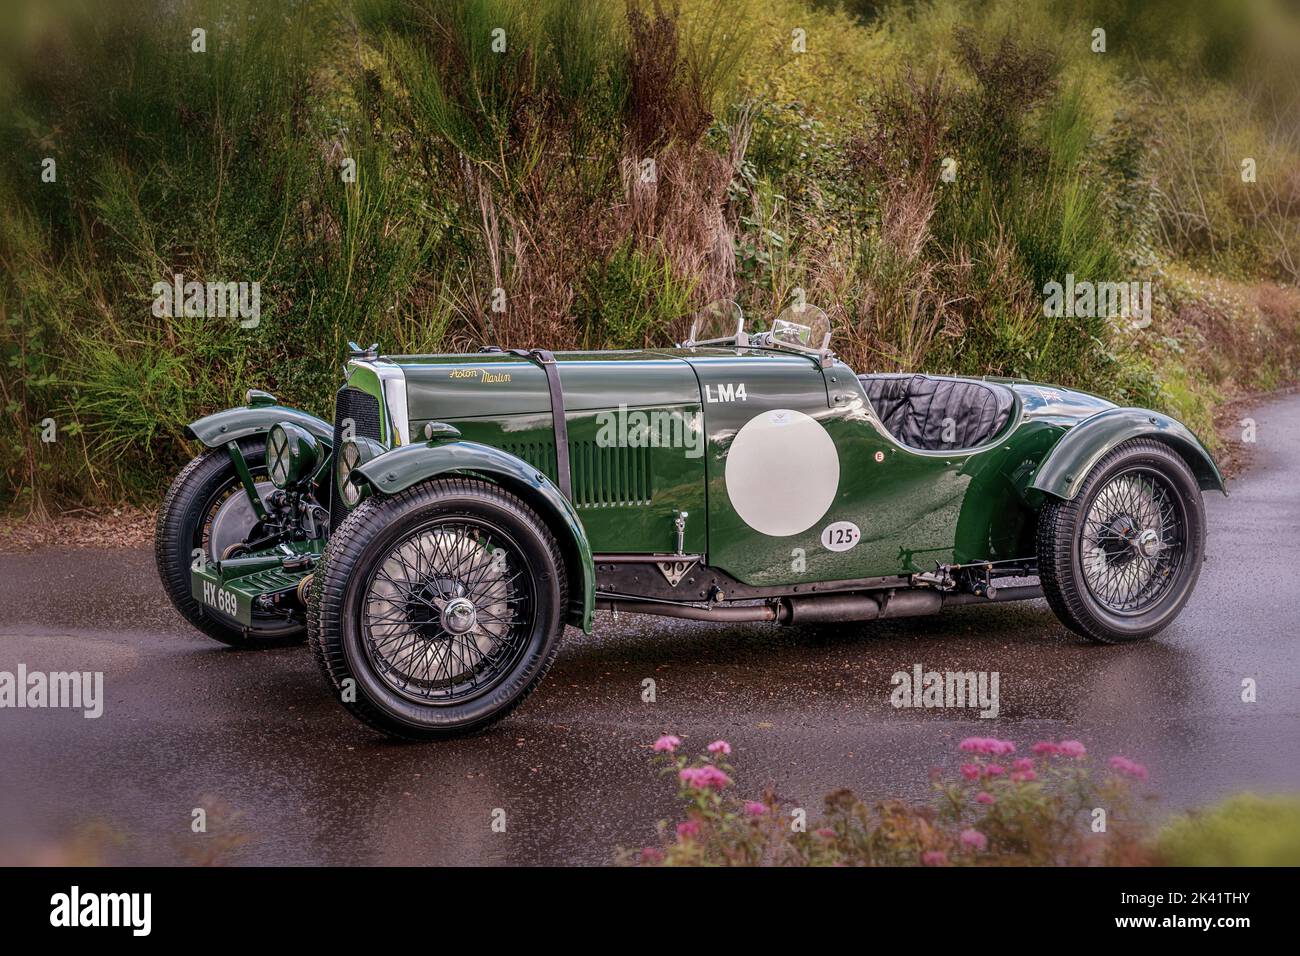 1930 Aston Martin LM4 former team racing car Stock Photo